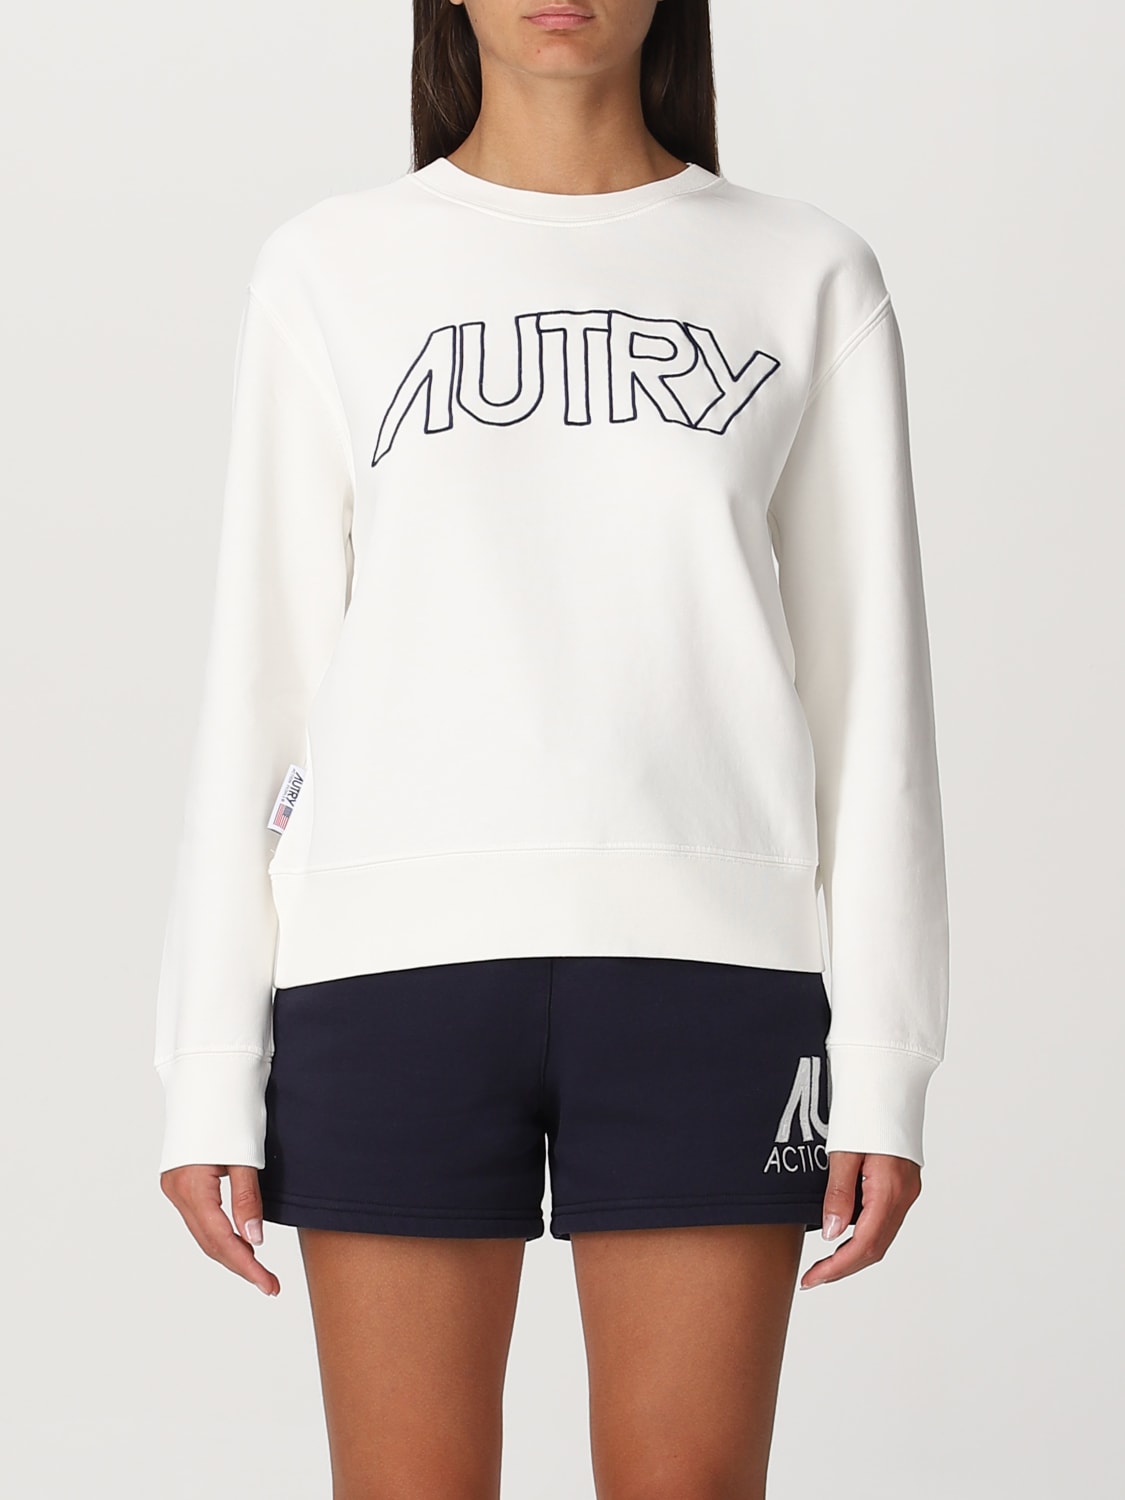 Autry cotton sweatshirt